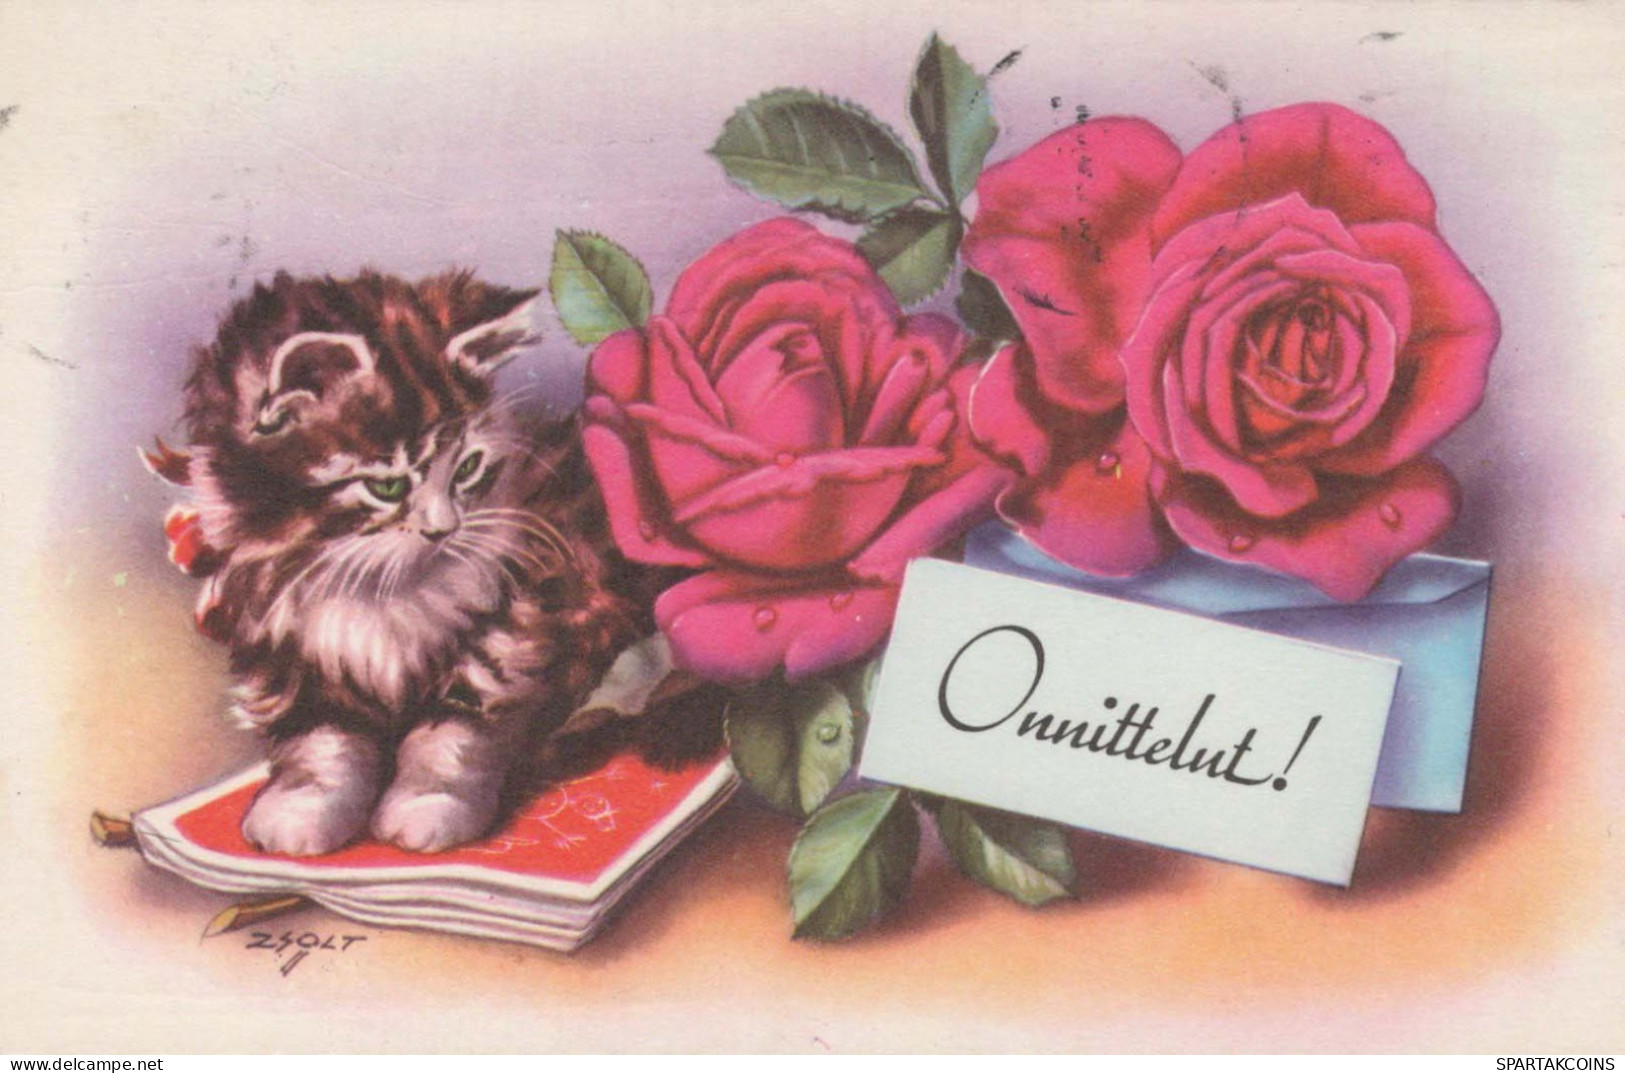 KATZE MIEZEKATZE Tier Vintage Ansichtskarte Postkarte CPA #PKE750.A - Cats